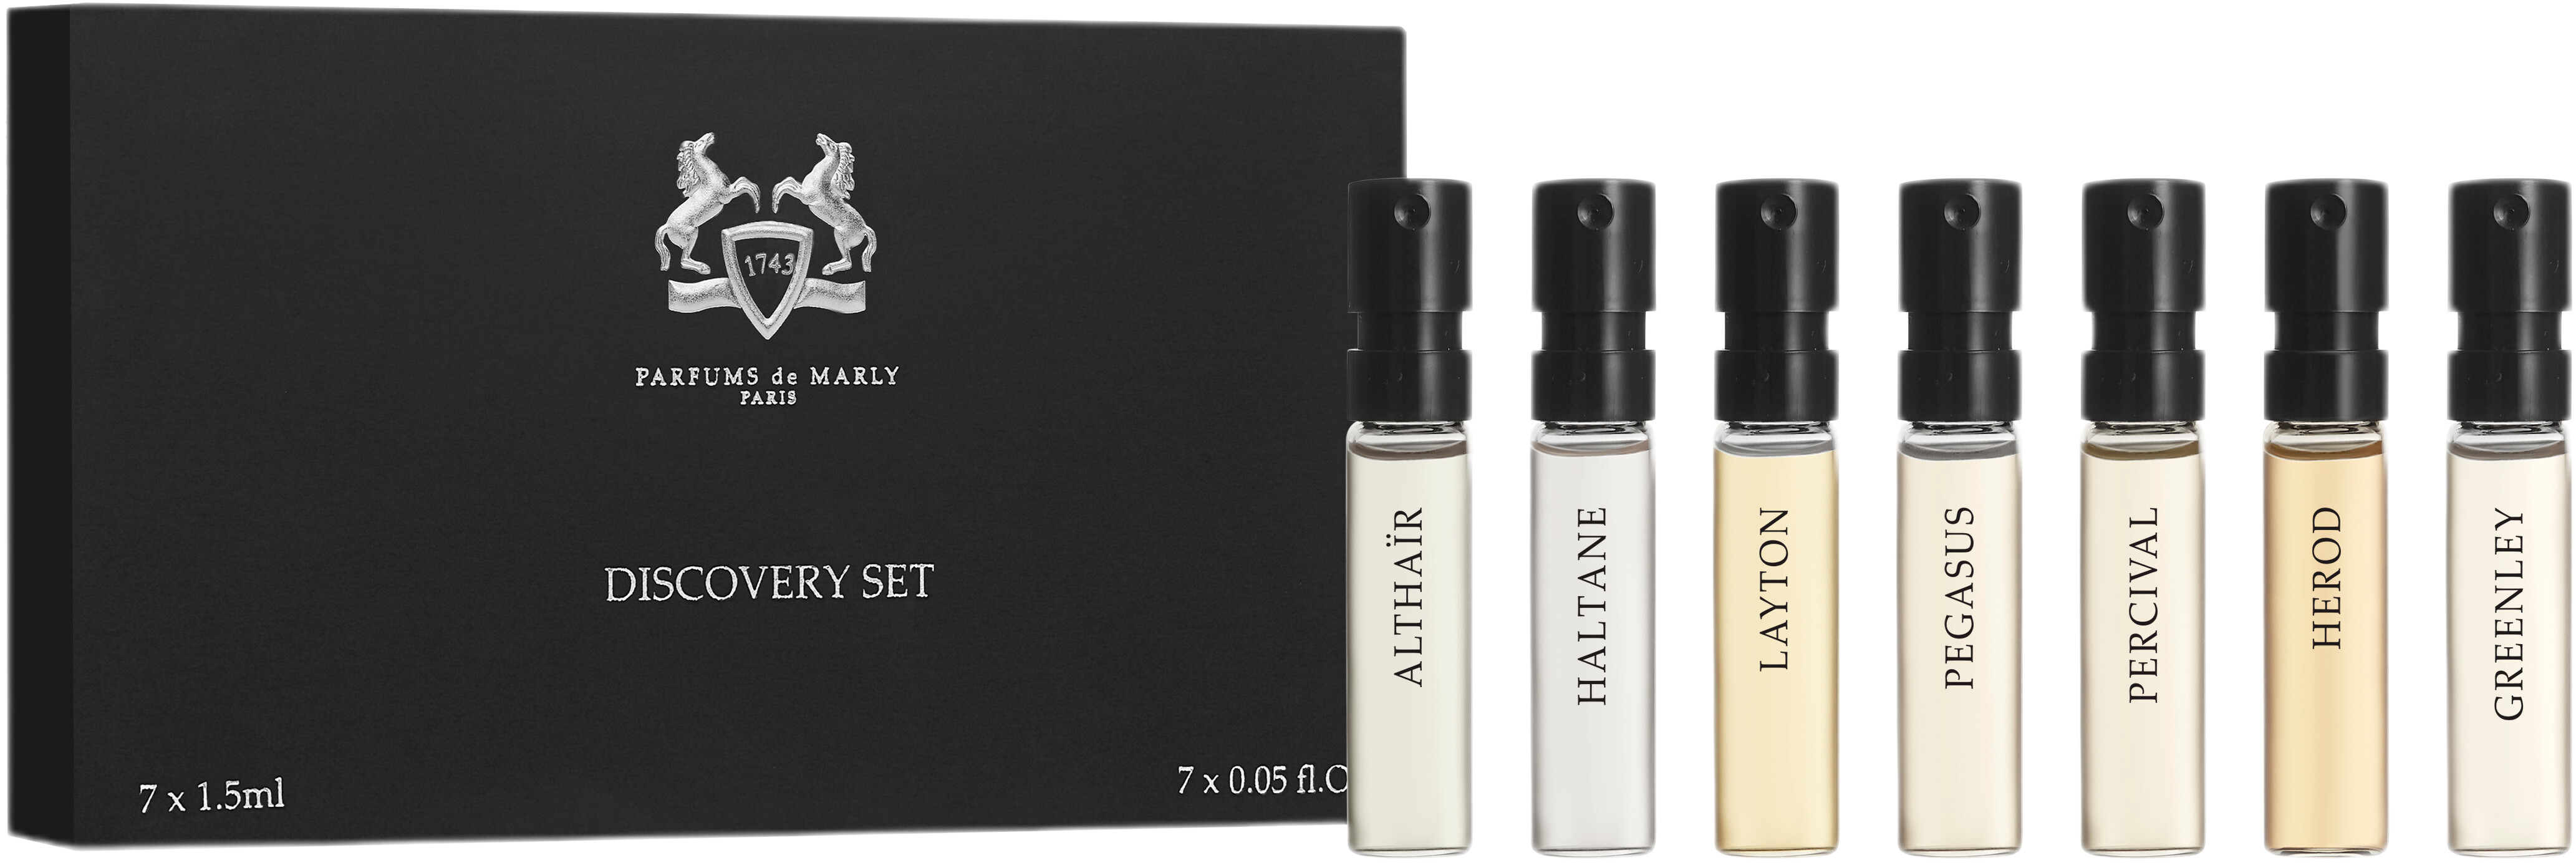 Parfums de Marly Discovery Set Masculine Eau de Parfum Spray 7 x 1.5ml